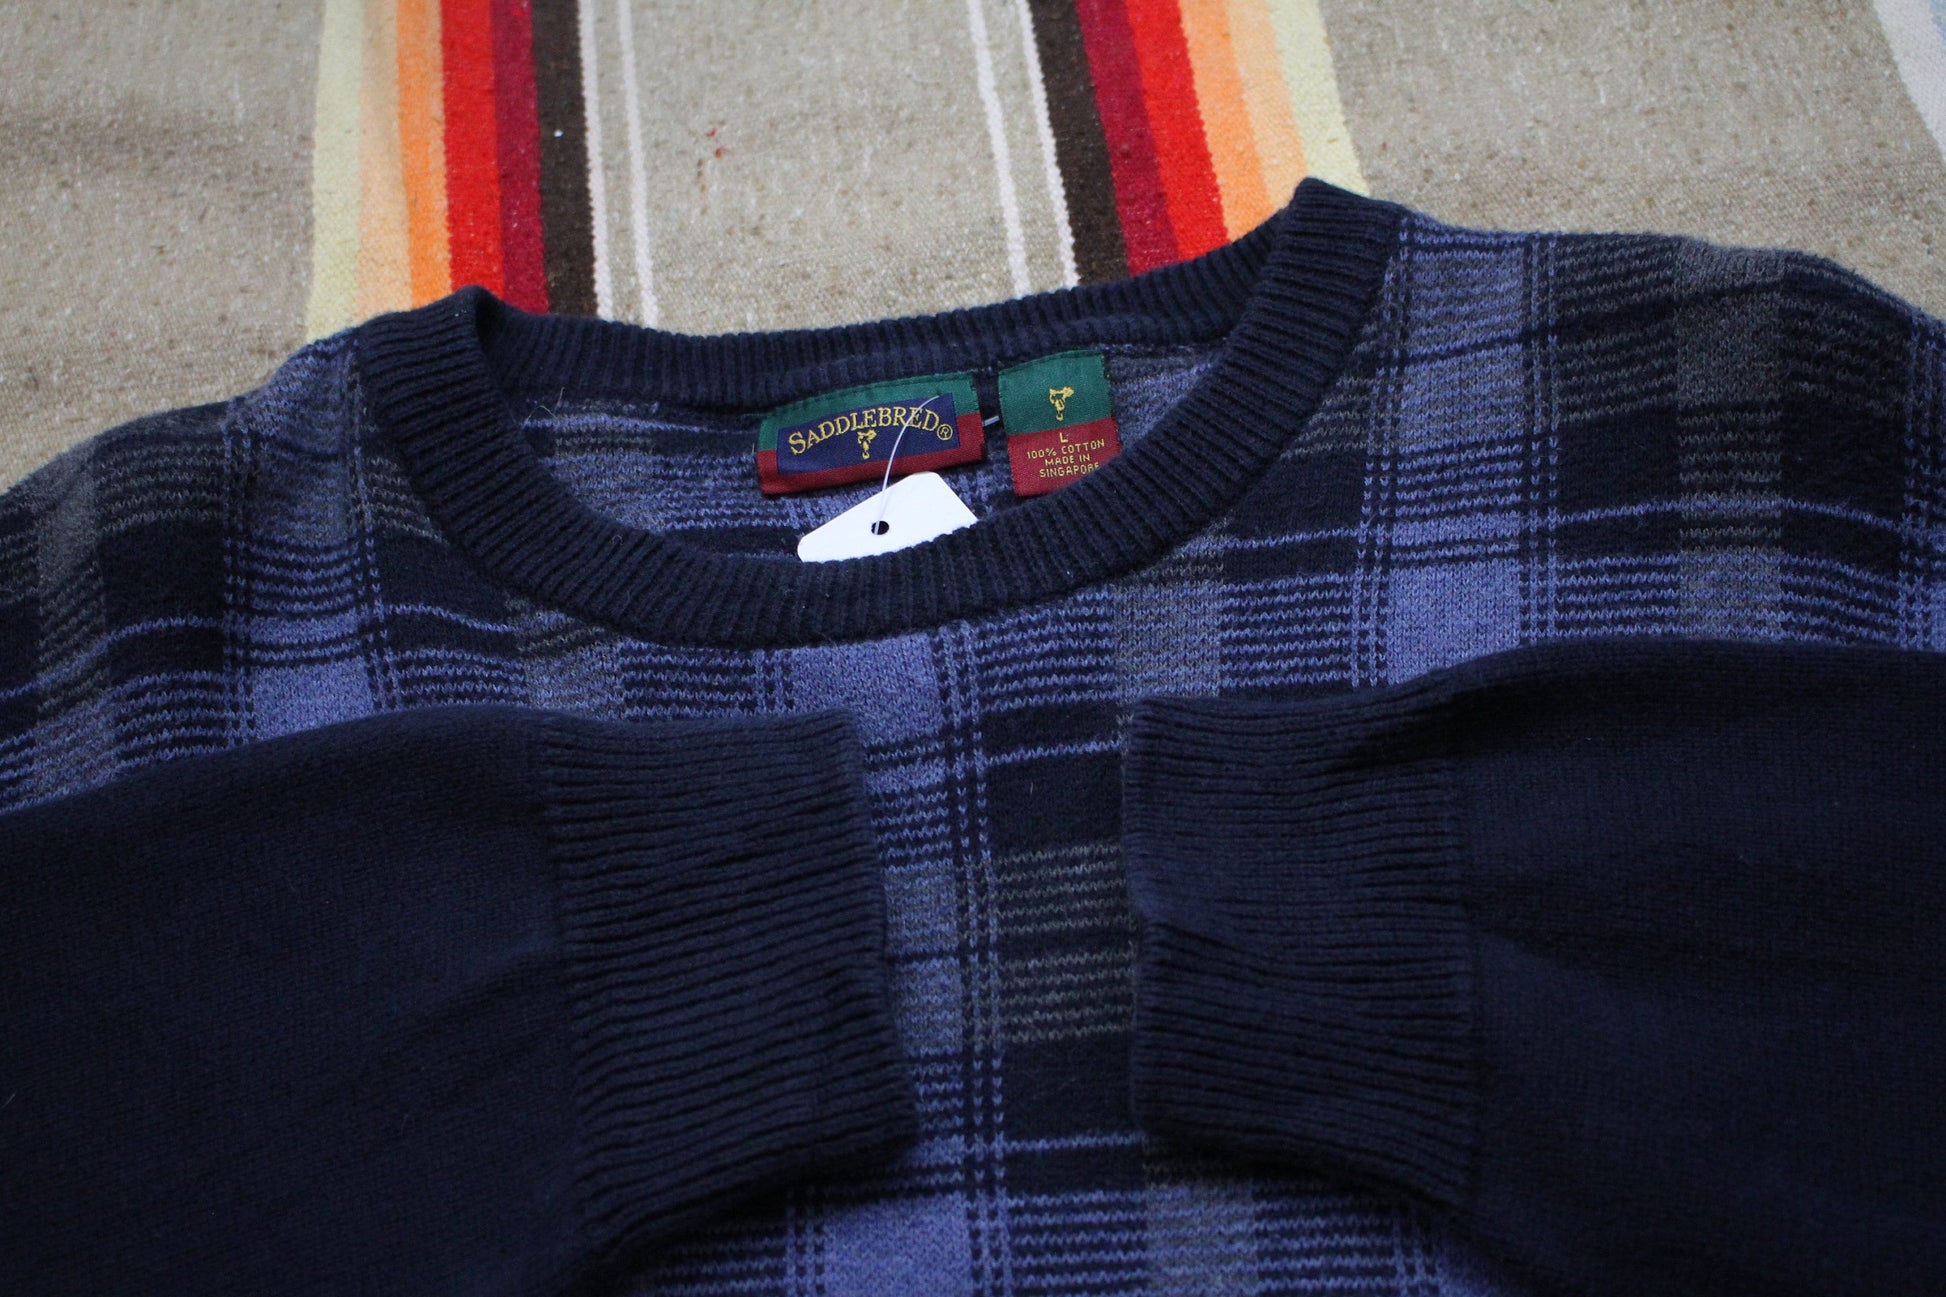 1990s Saddlebred Cotton Knit Sweater Size XL